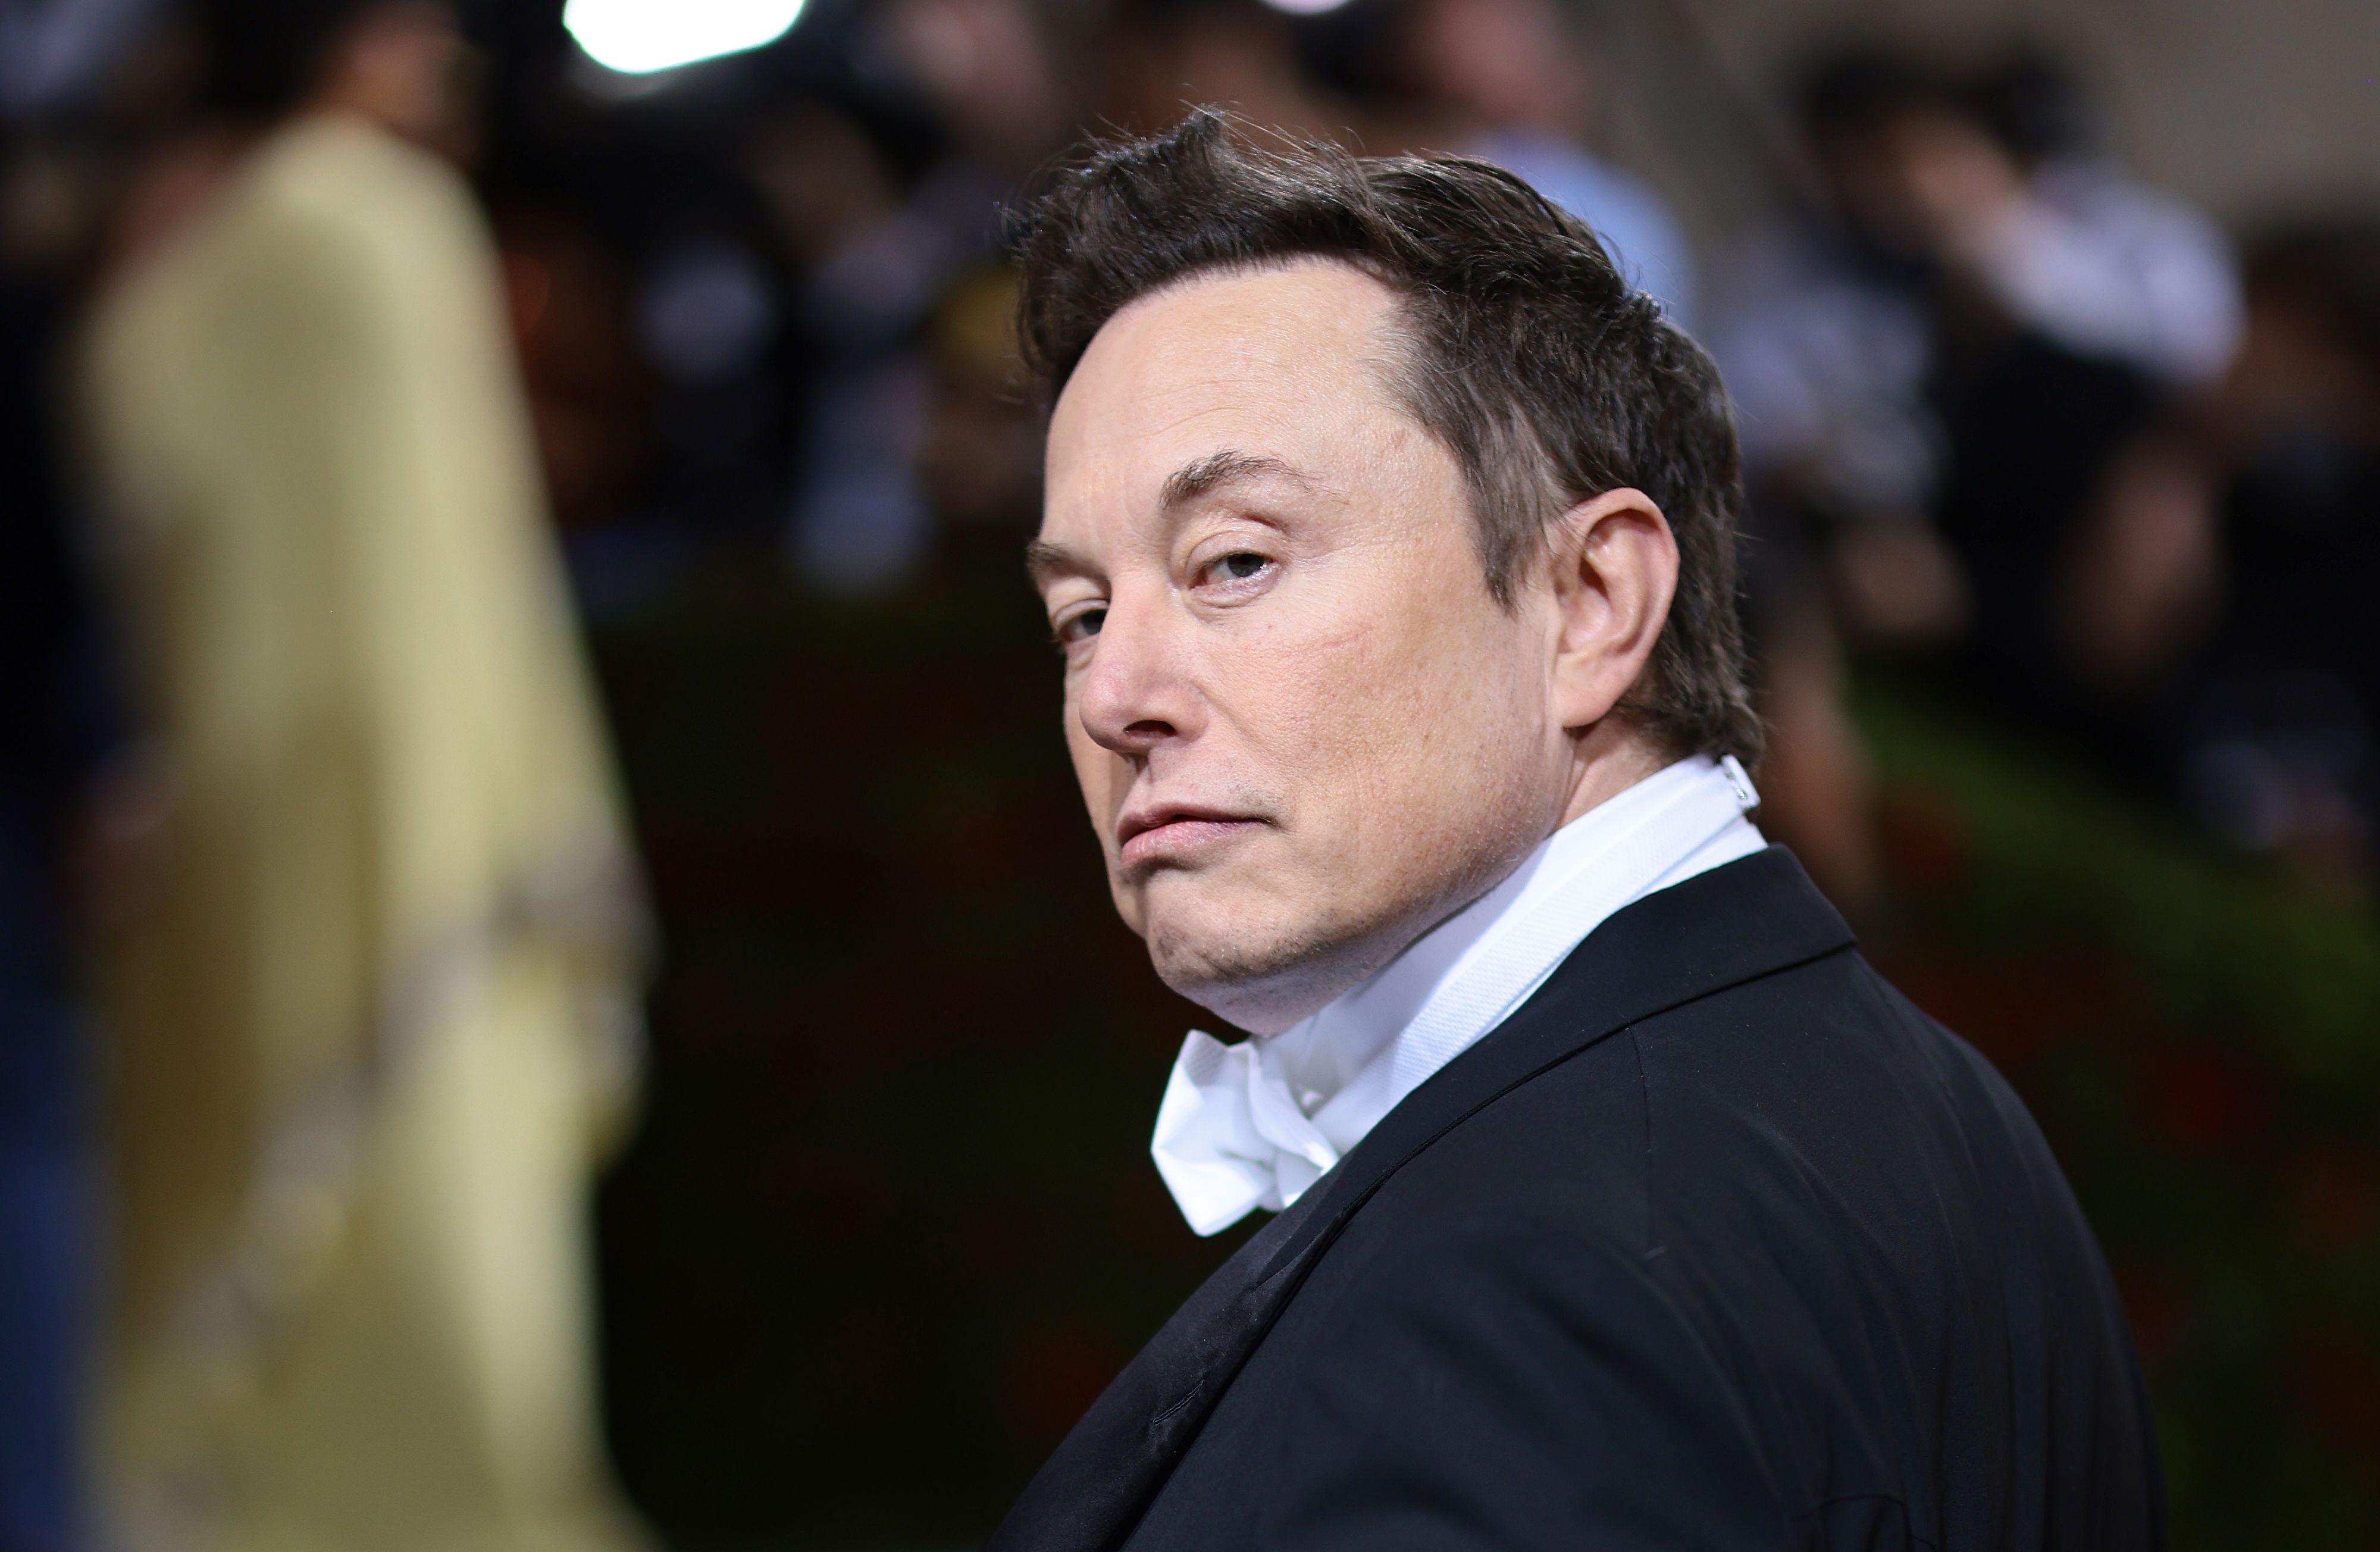 Elon Musk speaks out on 'Twitter Files' release about platform inner  workings | CNN Business